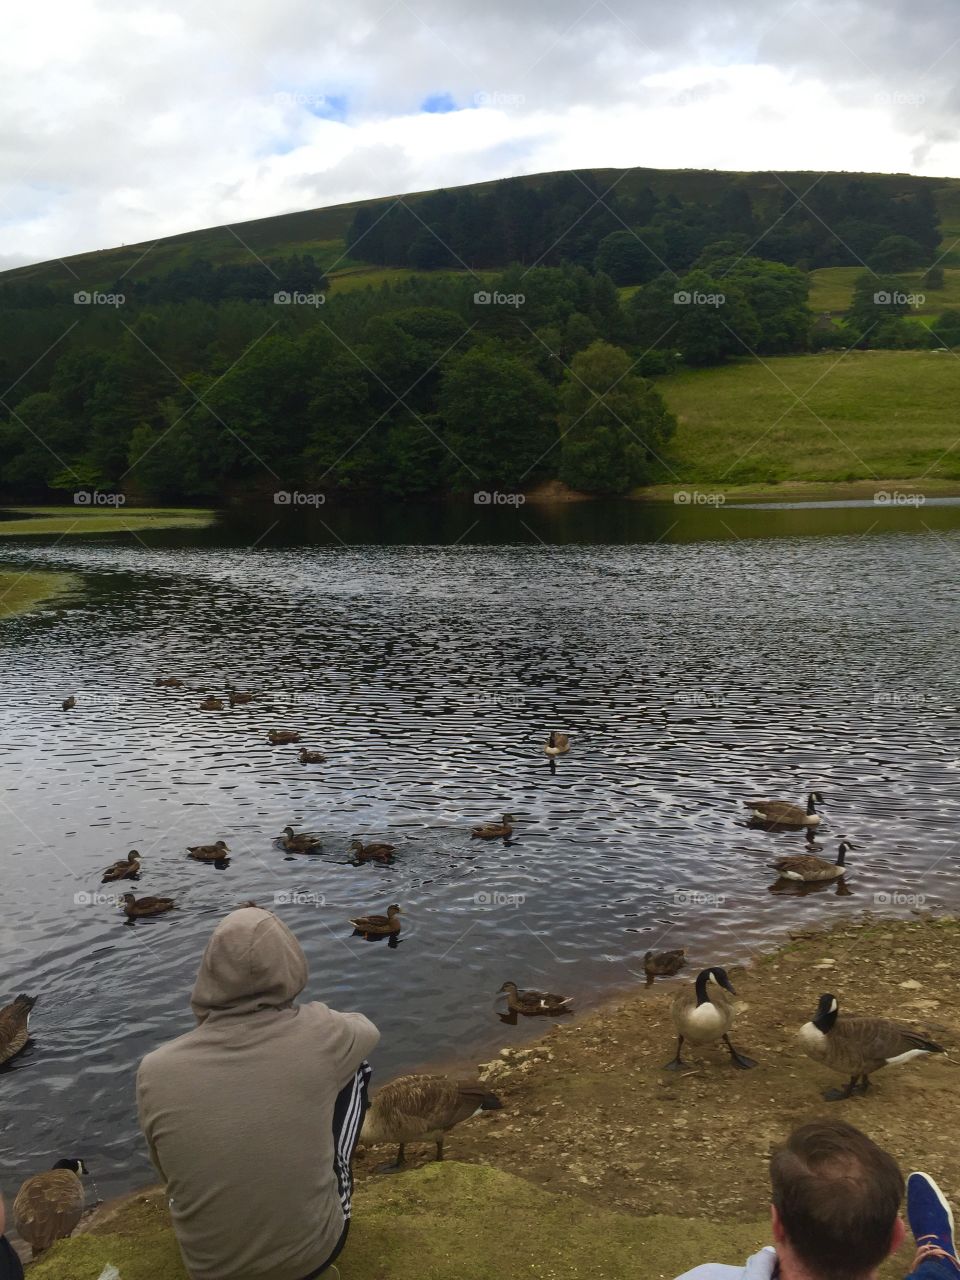 Ducks at Ladybower reservoir 